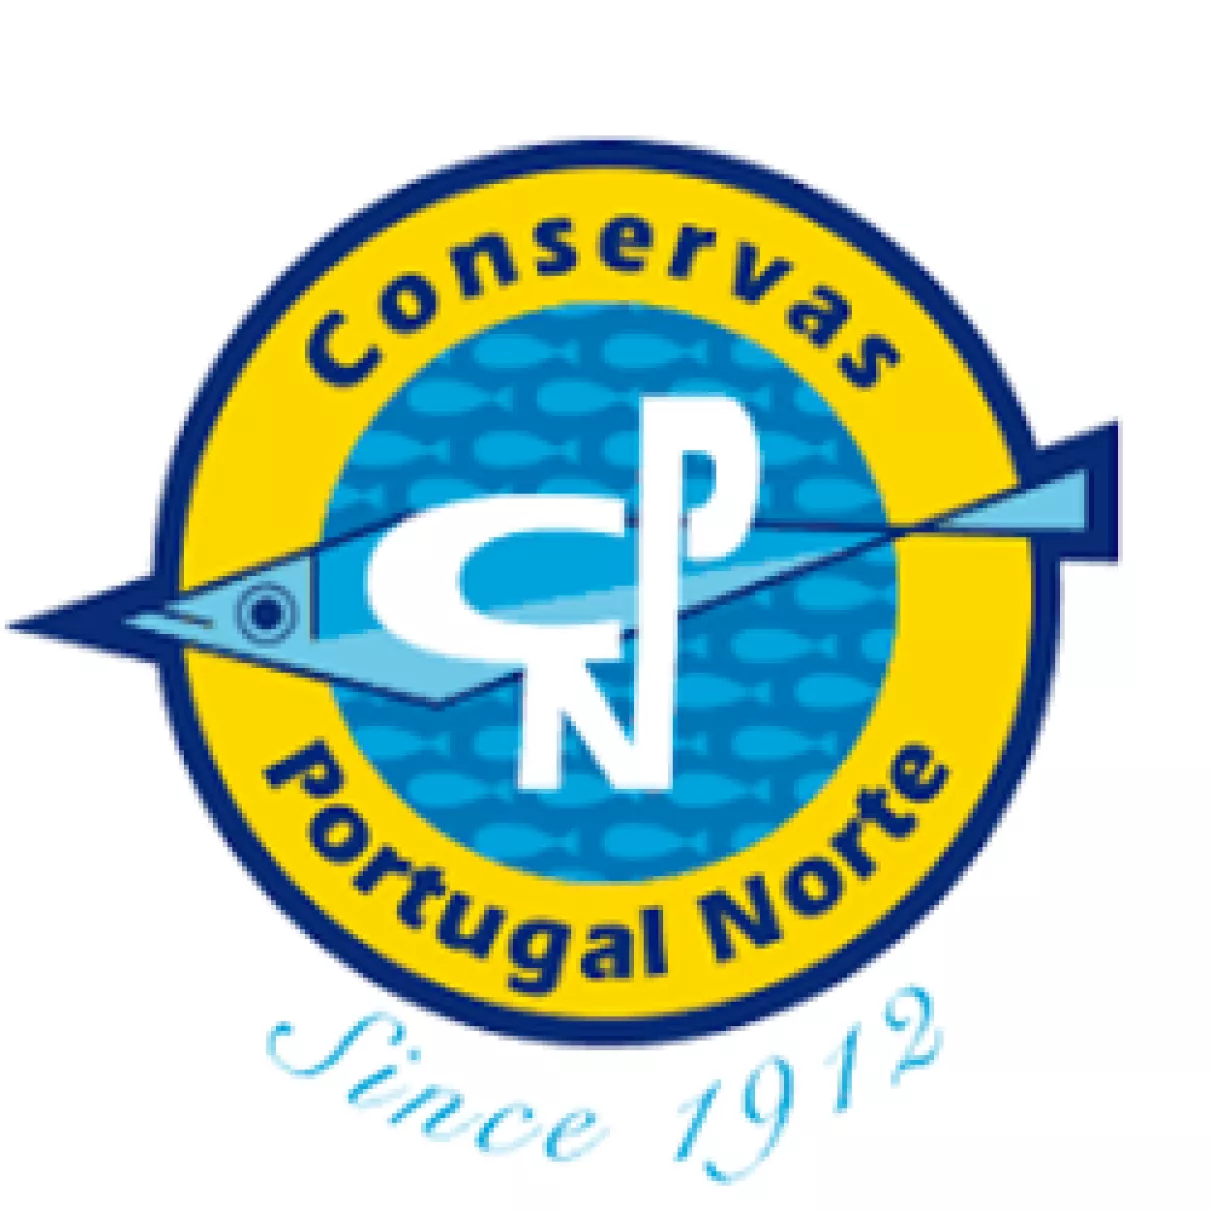 Conservas Portugal Norte